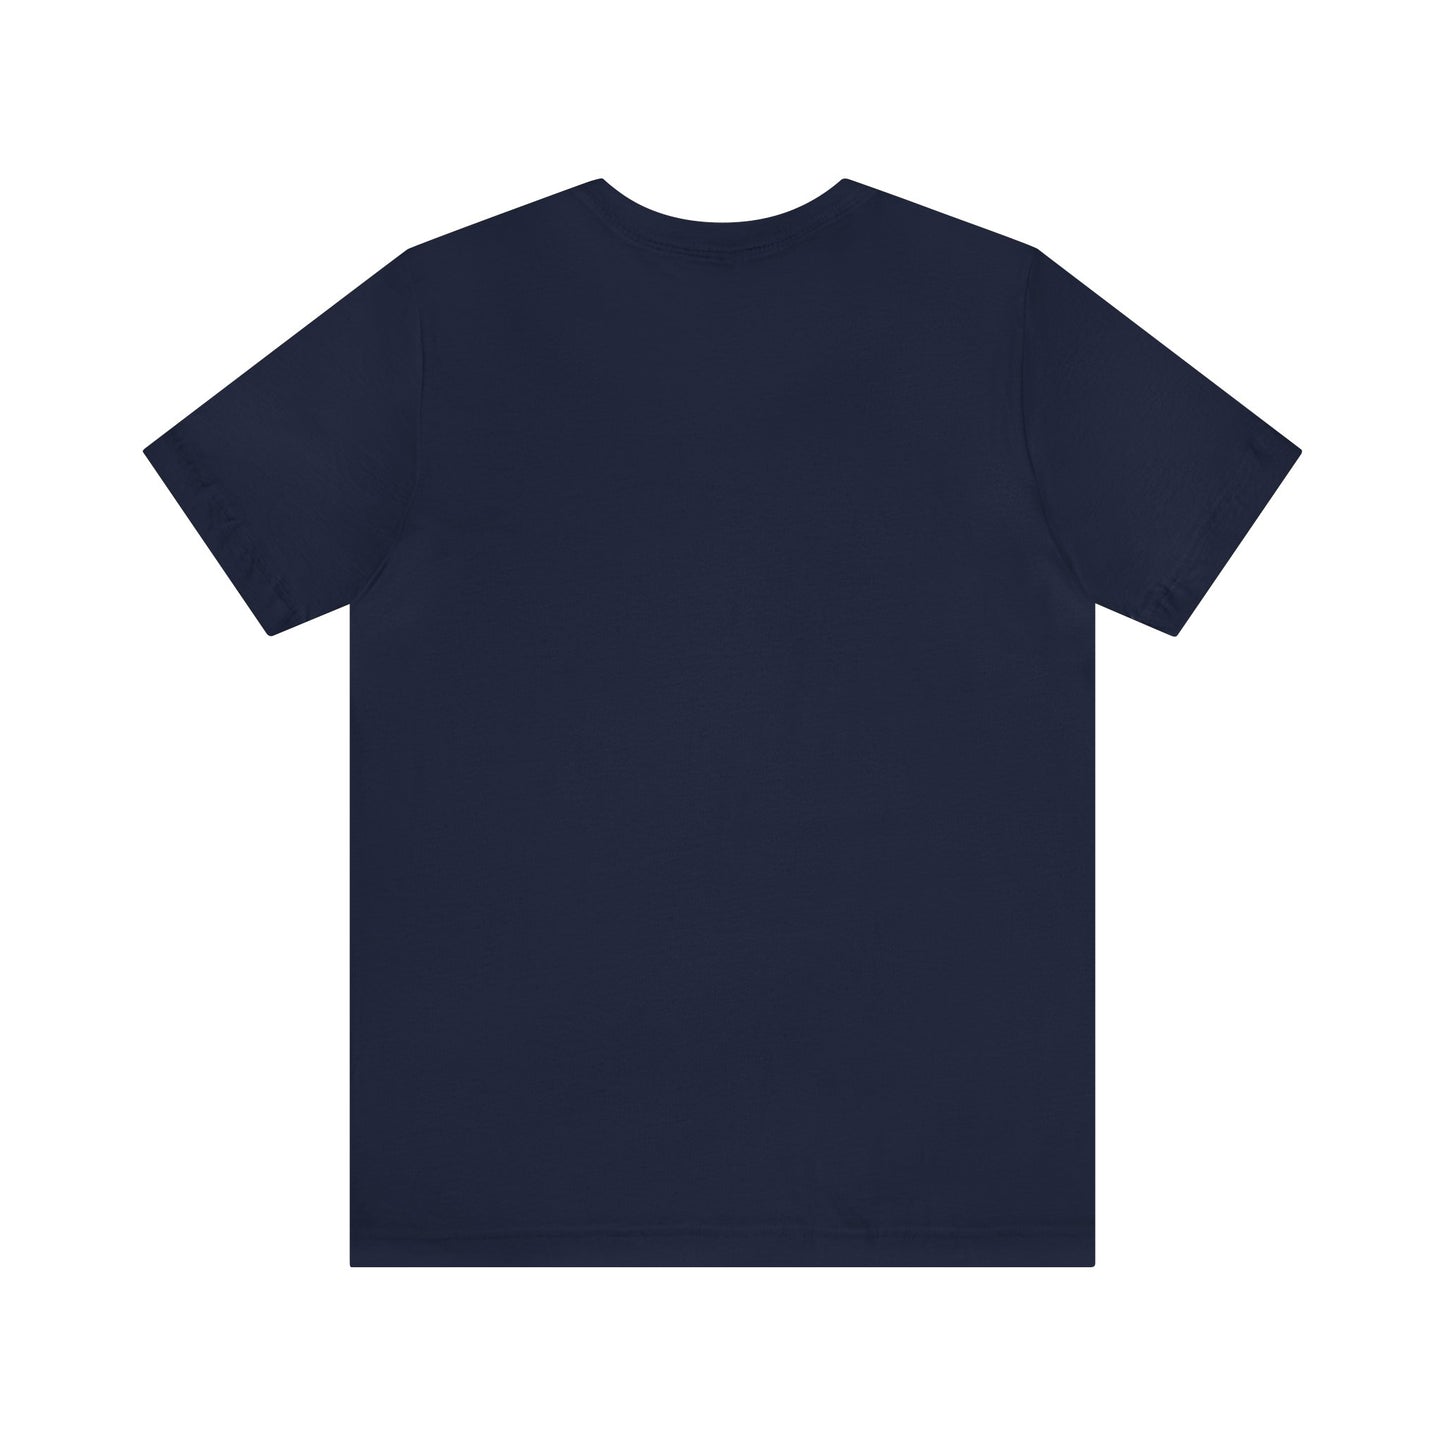 Motorcyclist Gift Idea | Motor Lover T-Shirt T-Shirt Petrova Designs